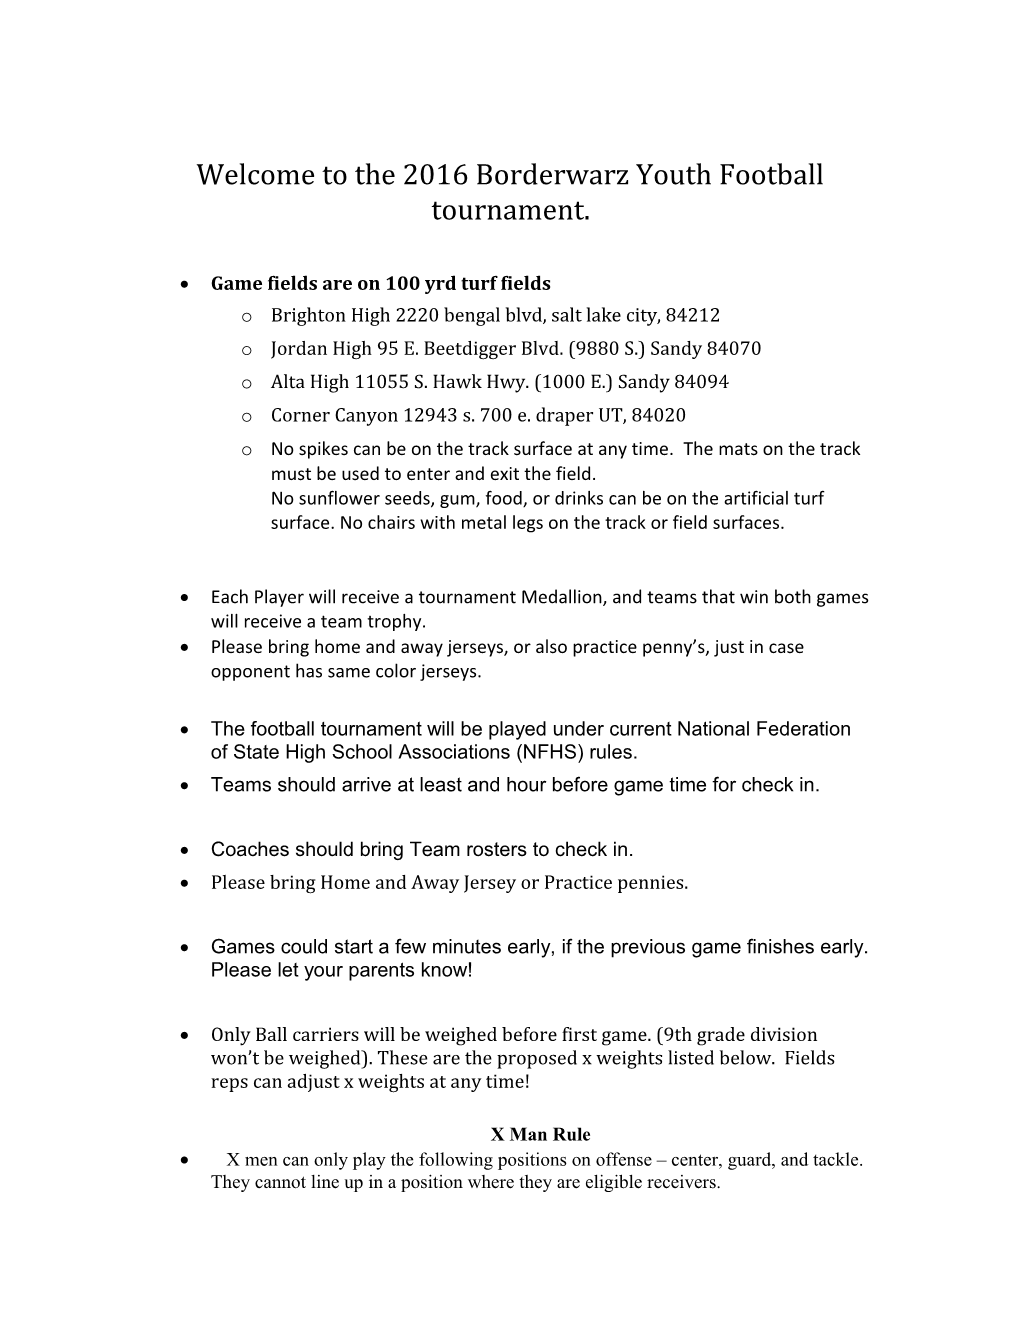 Welcome to the 2016 Borderwarz Youth Football Tournament